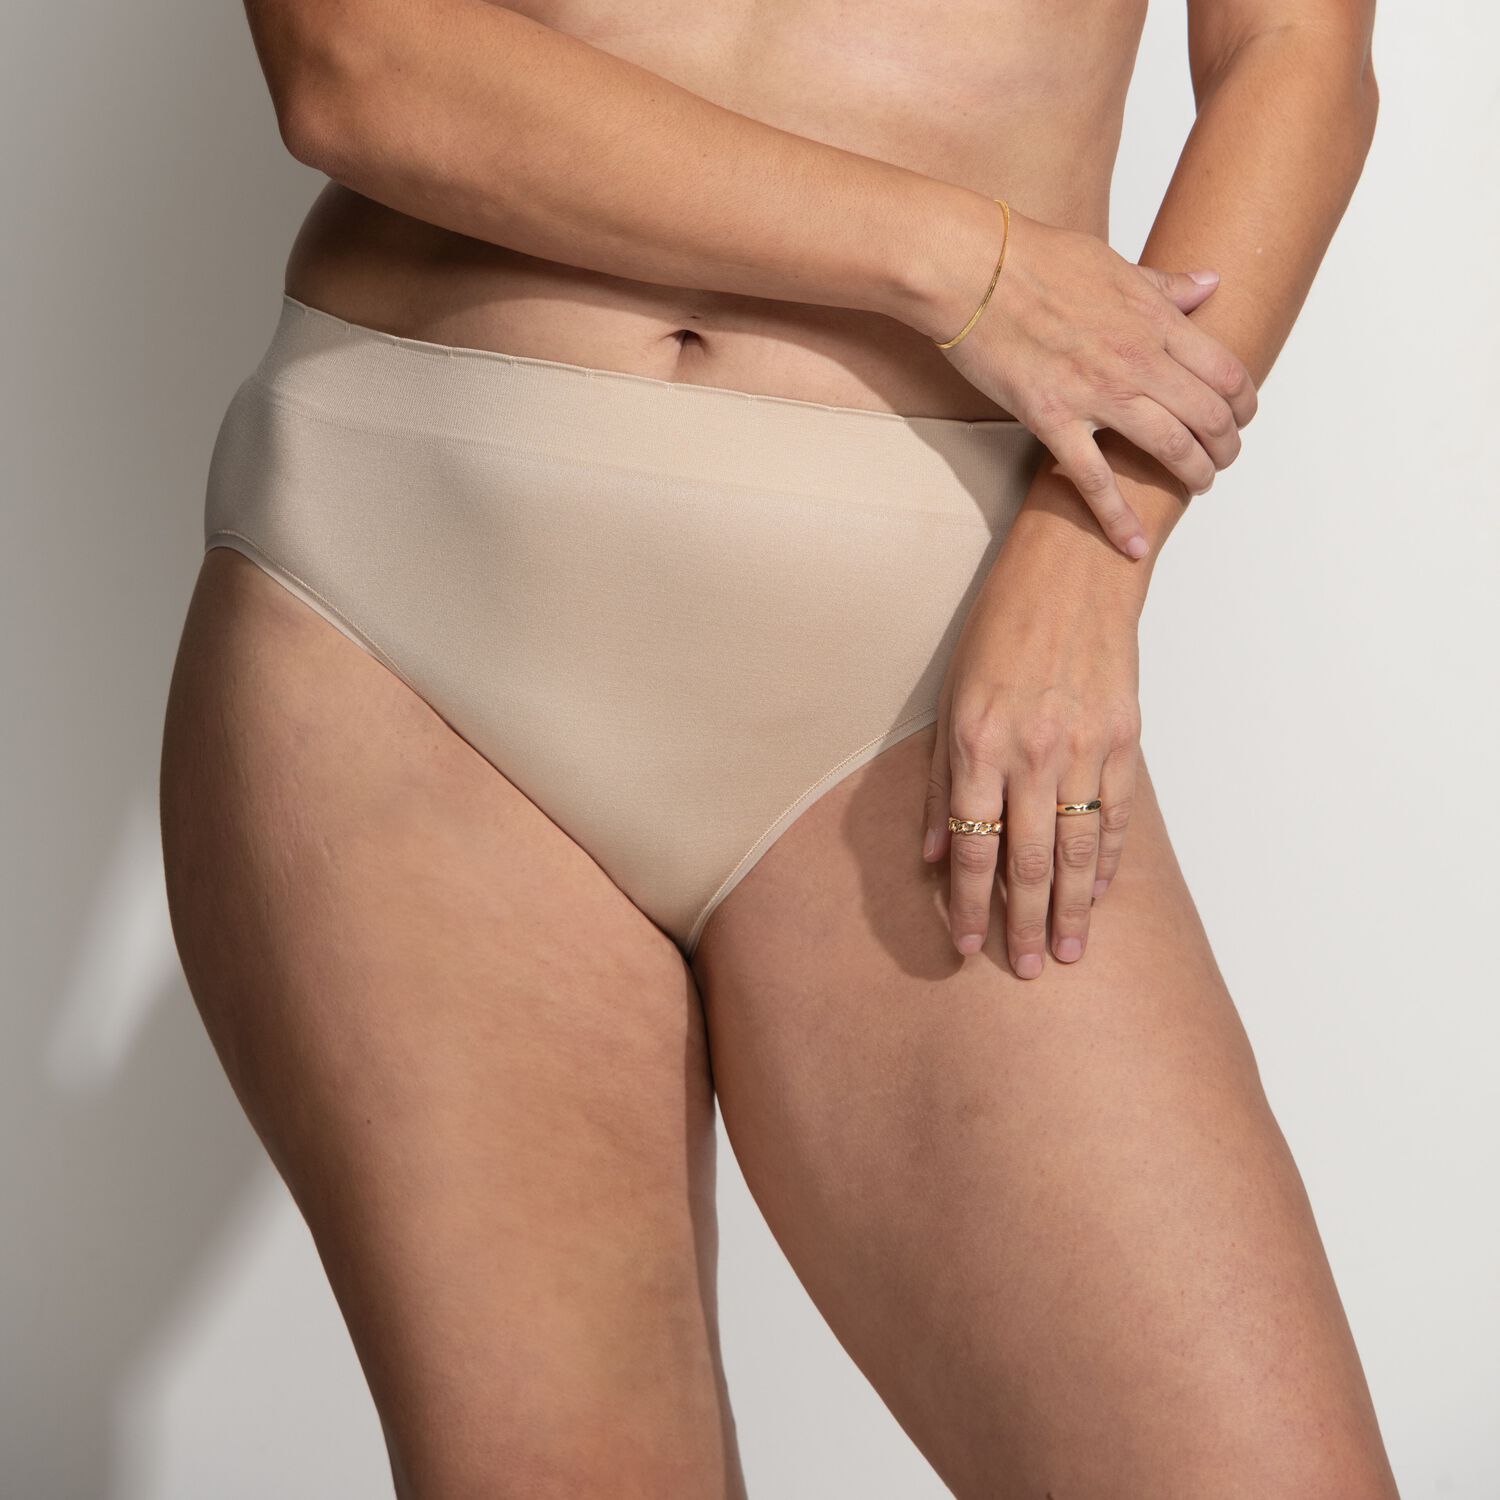  Reveal Lingerie Women's Seamless No-Show Thong Underwear